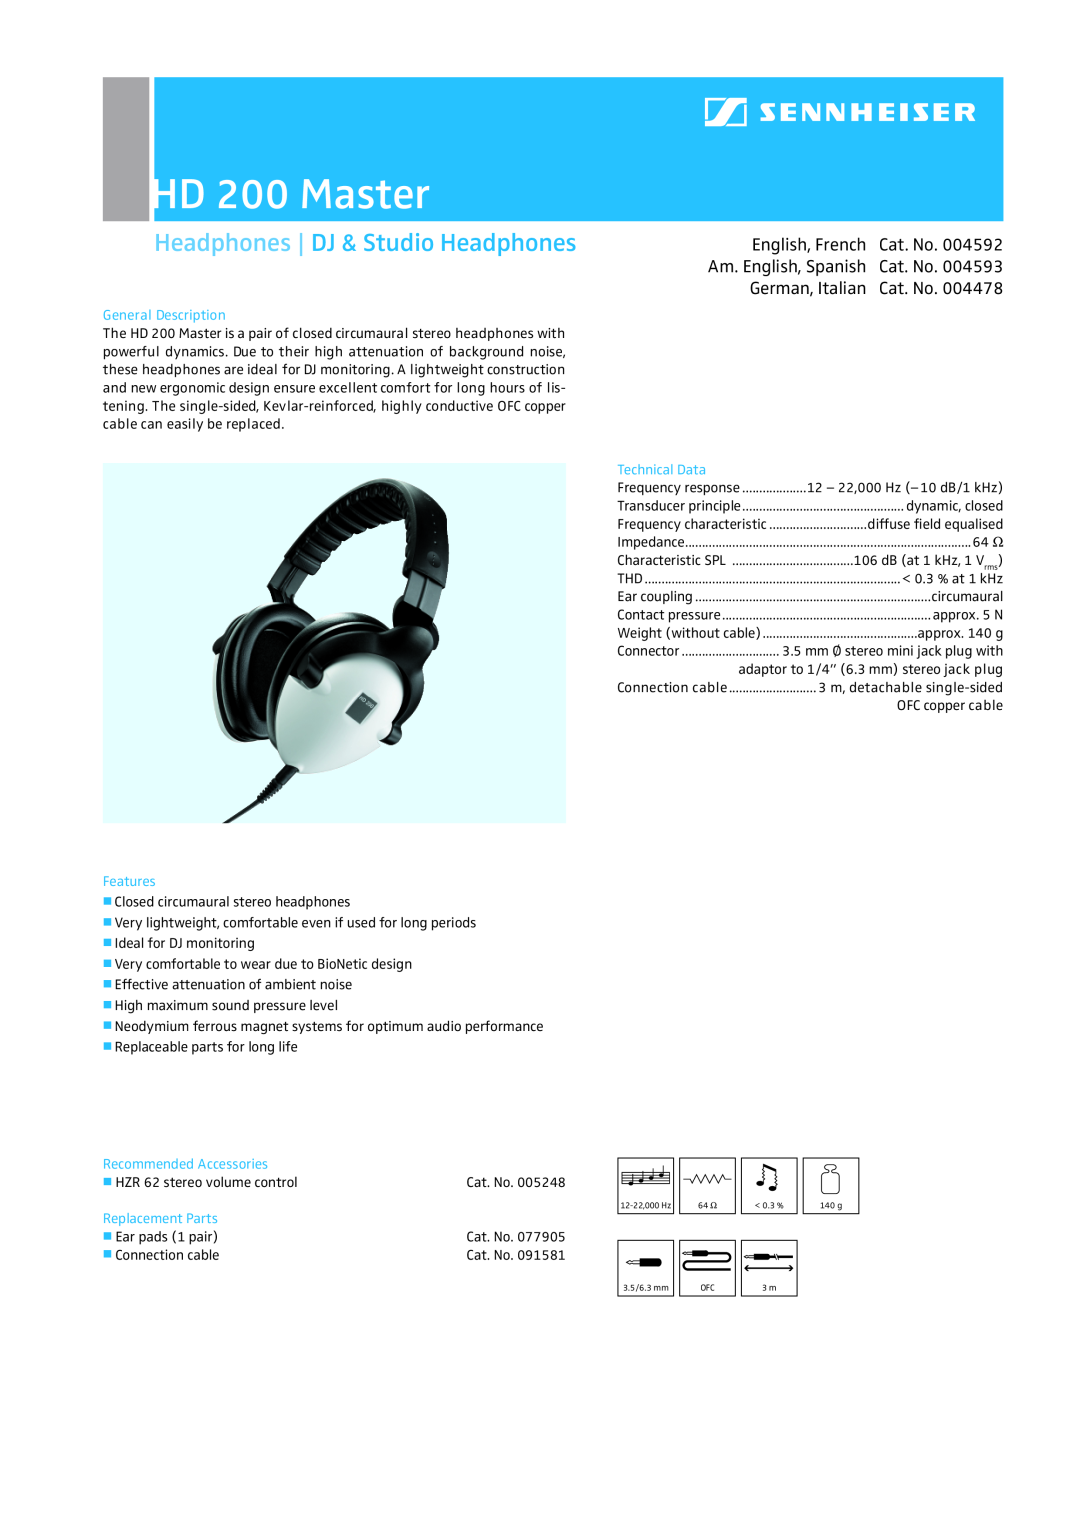 Sennheiser manual HD 200 Master, Headphones DJ & Studio Headphones, General Description, Technical Data, Features 